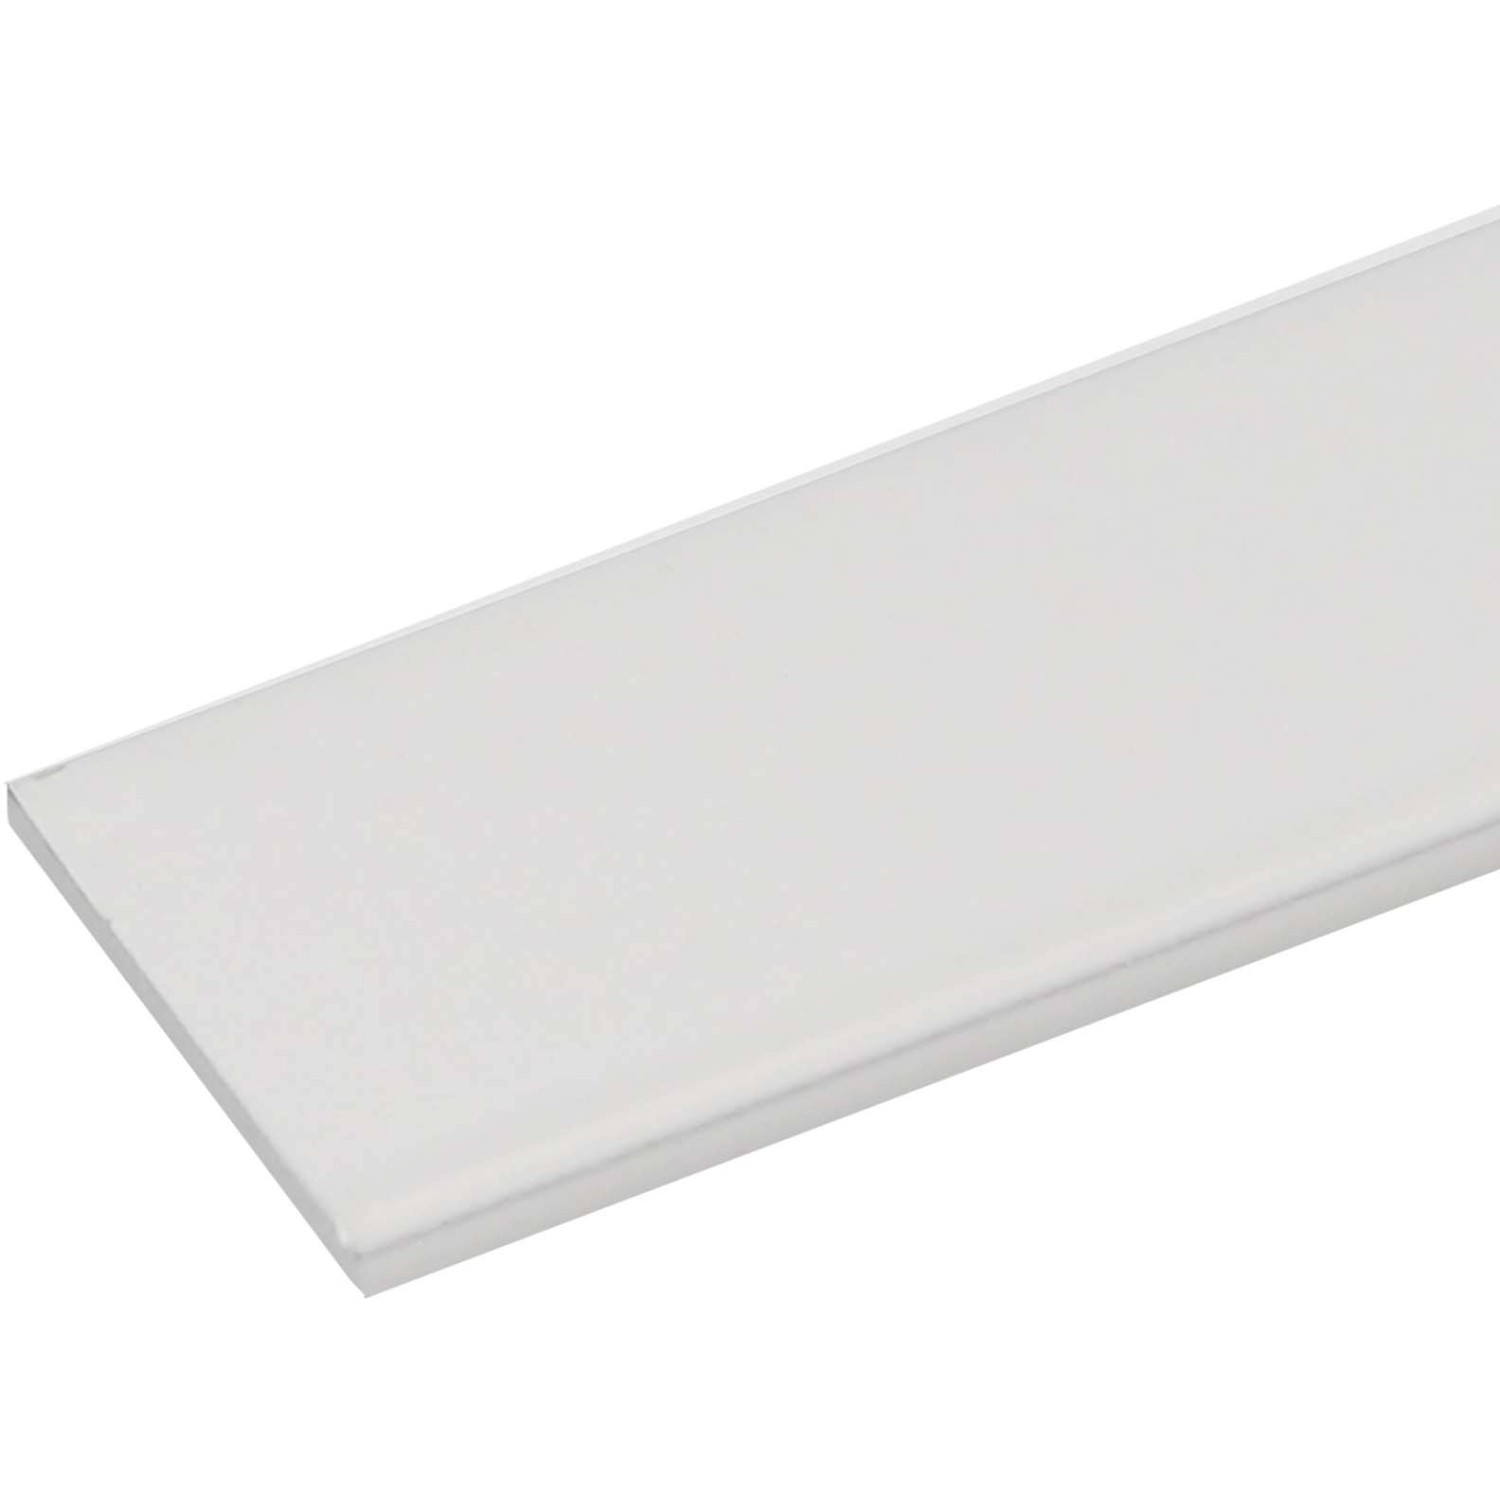 Arcansas Flachstange Aluminium Weiß lackiert 2 x 30 x 1000 mm